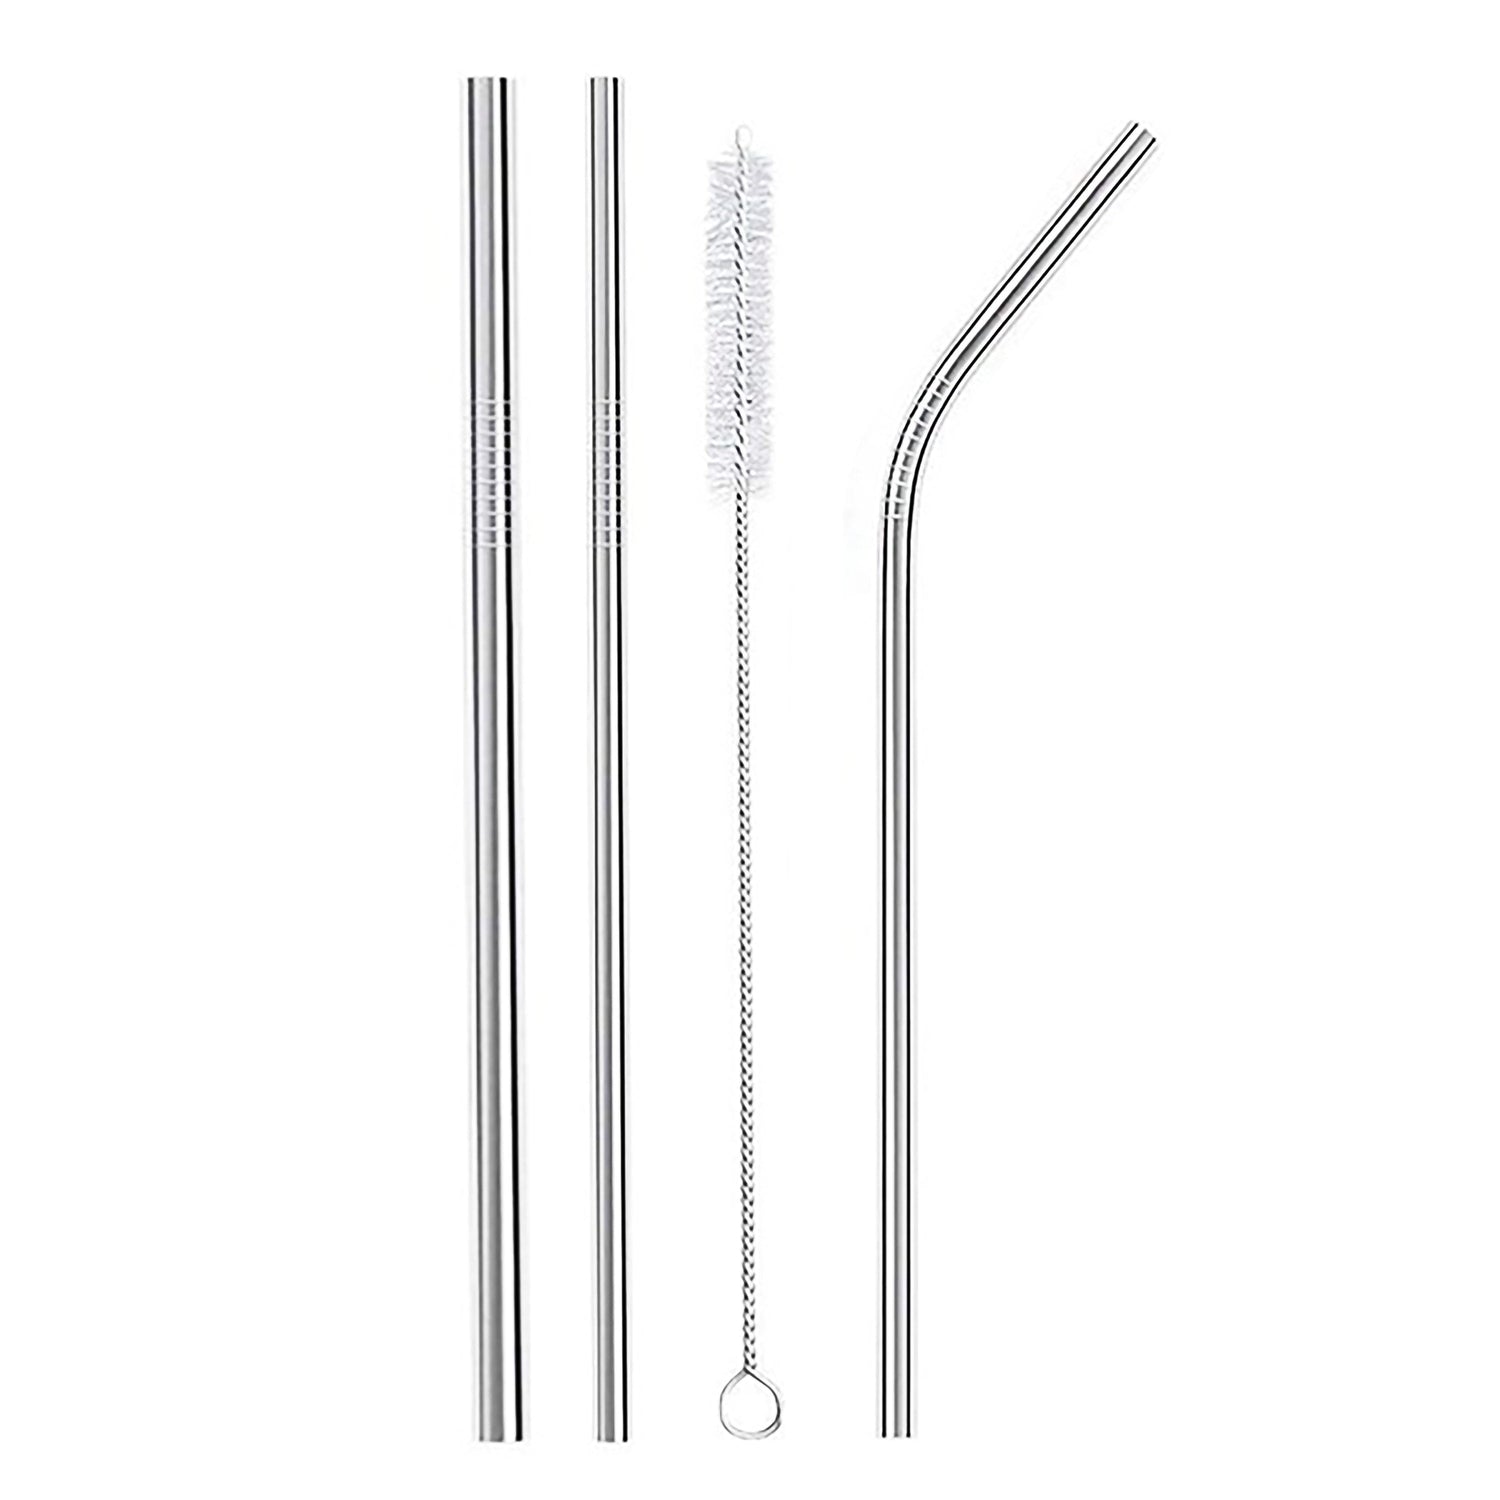 Stainless Steel Straws - Plastic Free. Reusable.